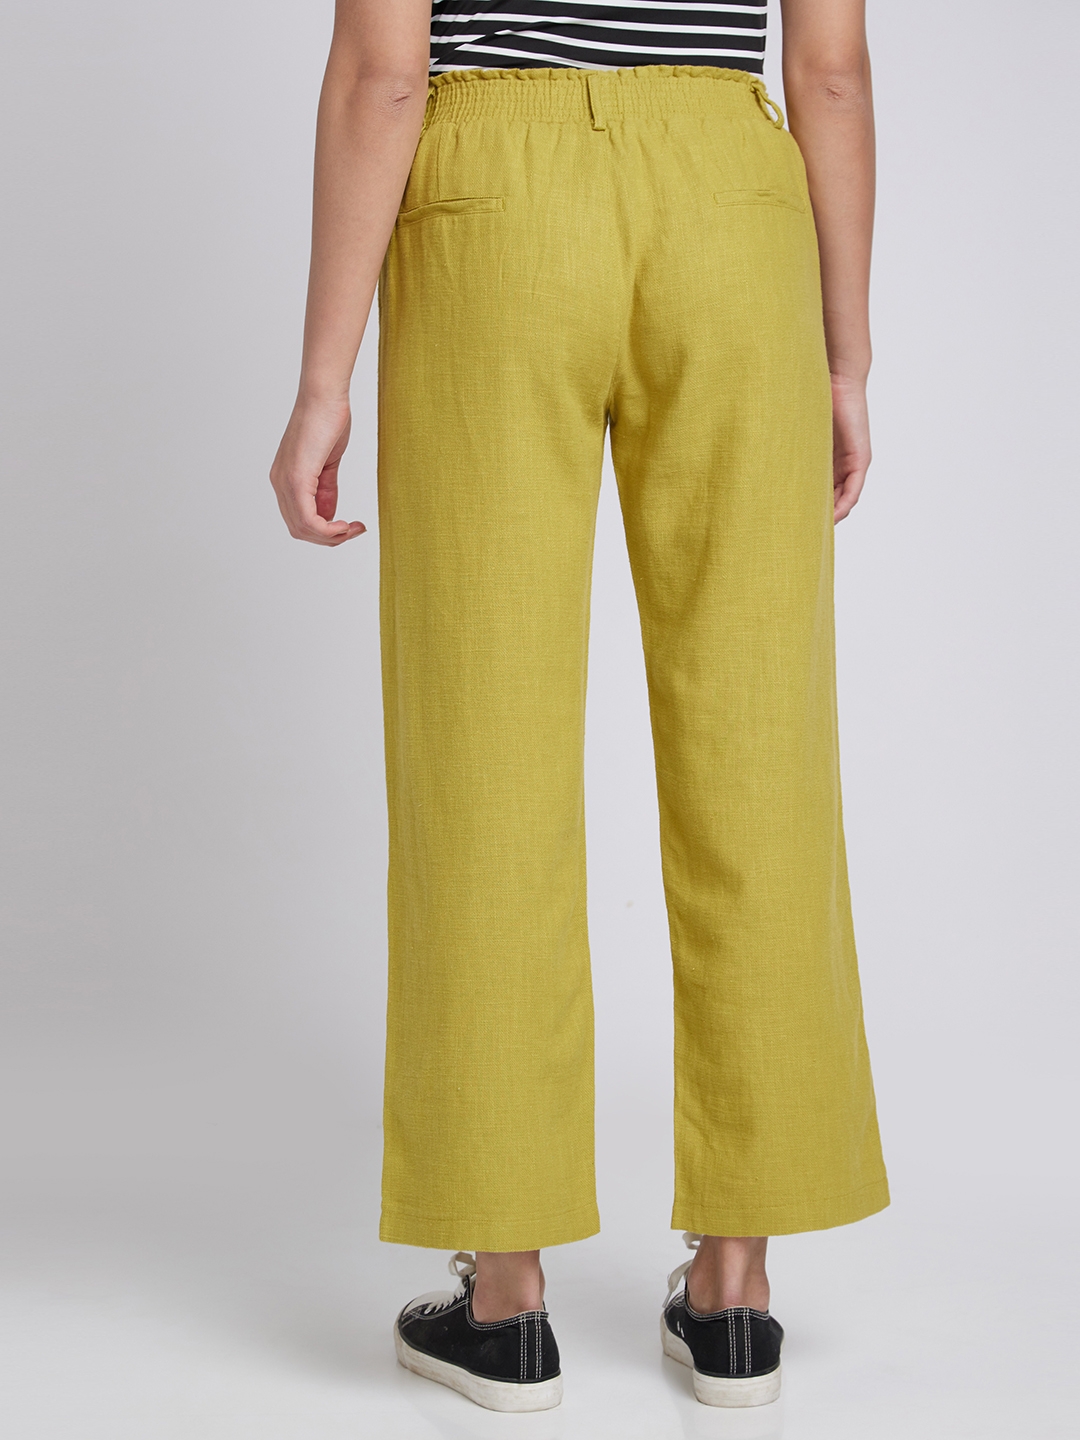 spykar | Women's Yellow Linen Solid Trousers 2